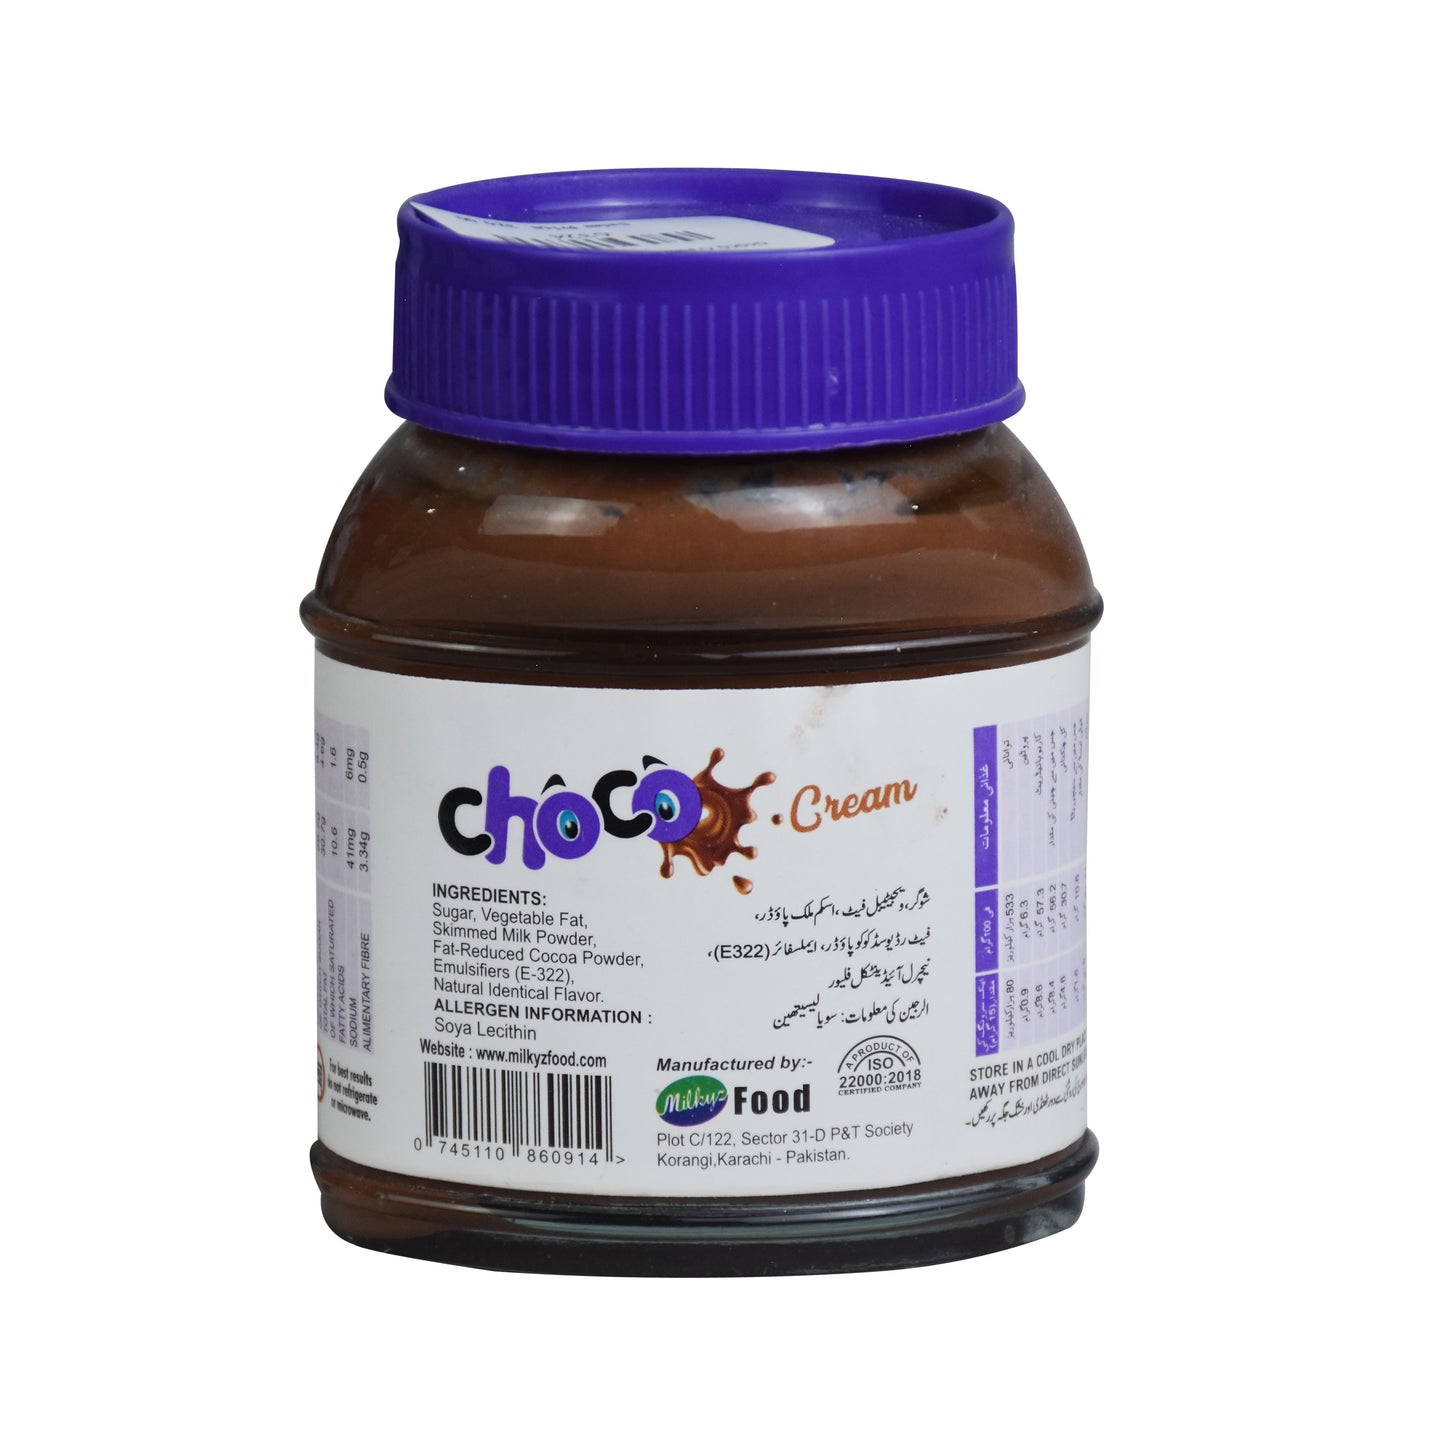 Milkyz Food Choco Cream Chocolate Milk Spread 180g Jar Bottle